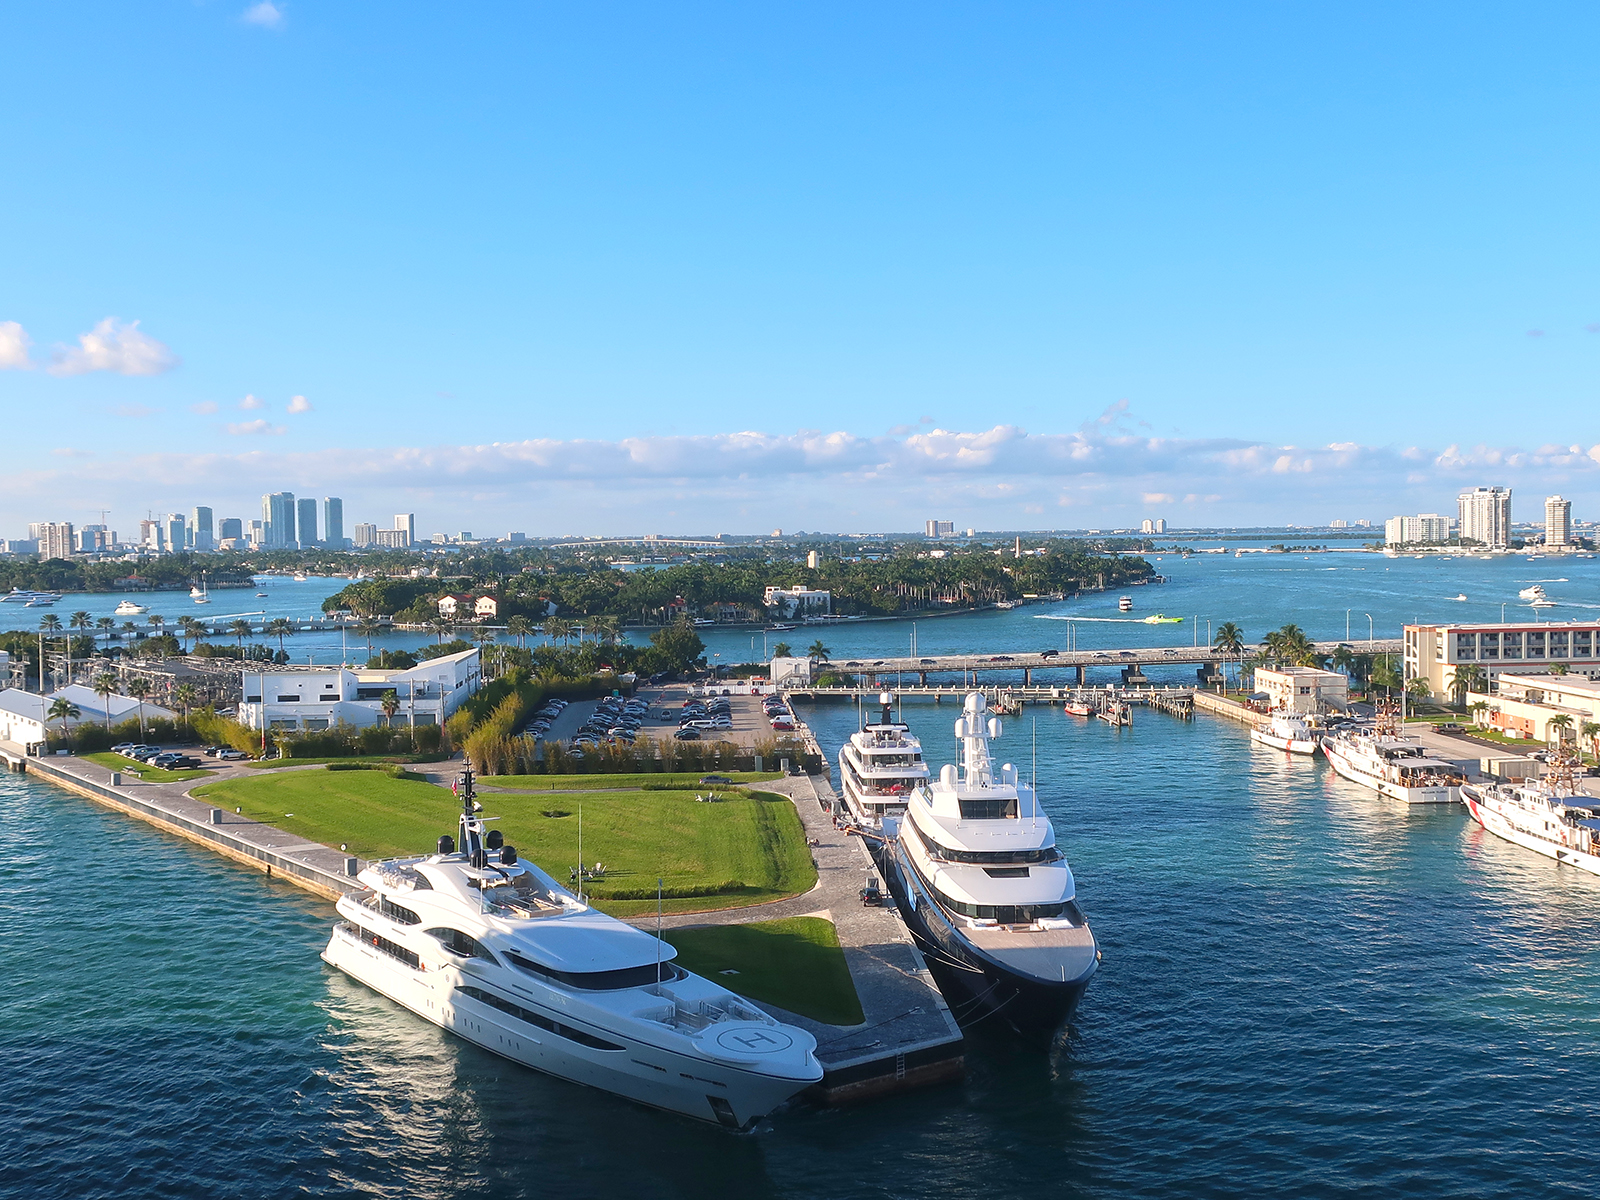 Dexter-Drehorte: 9 Locations in Miami, wo man Dexter Morgan begegnen kann 